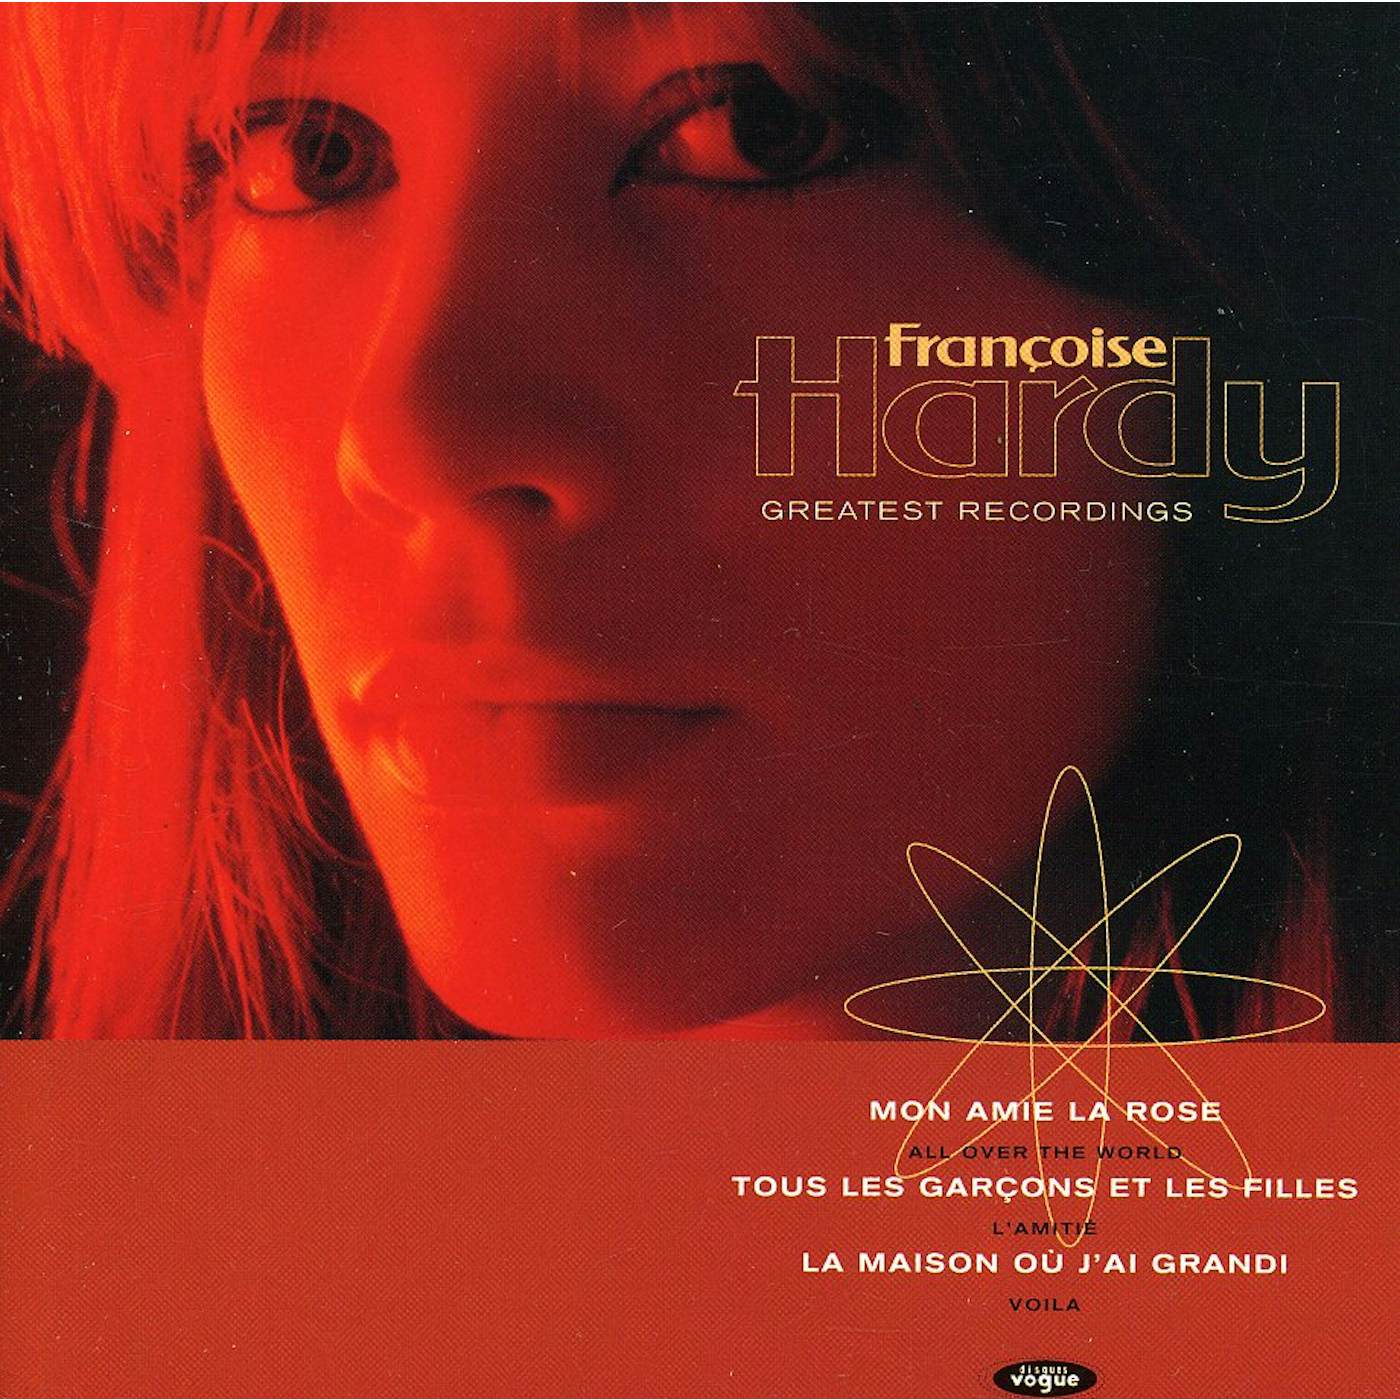 Françoise Hardy GREATEST RECORDINGS CD